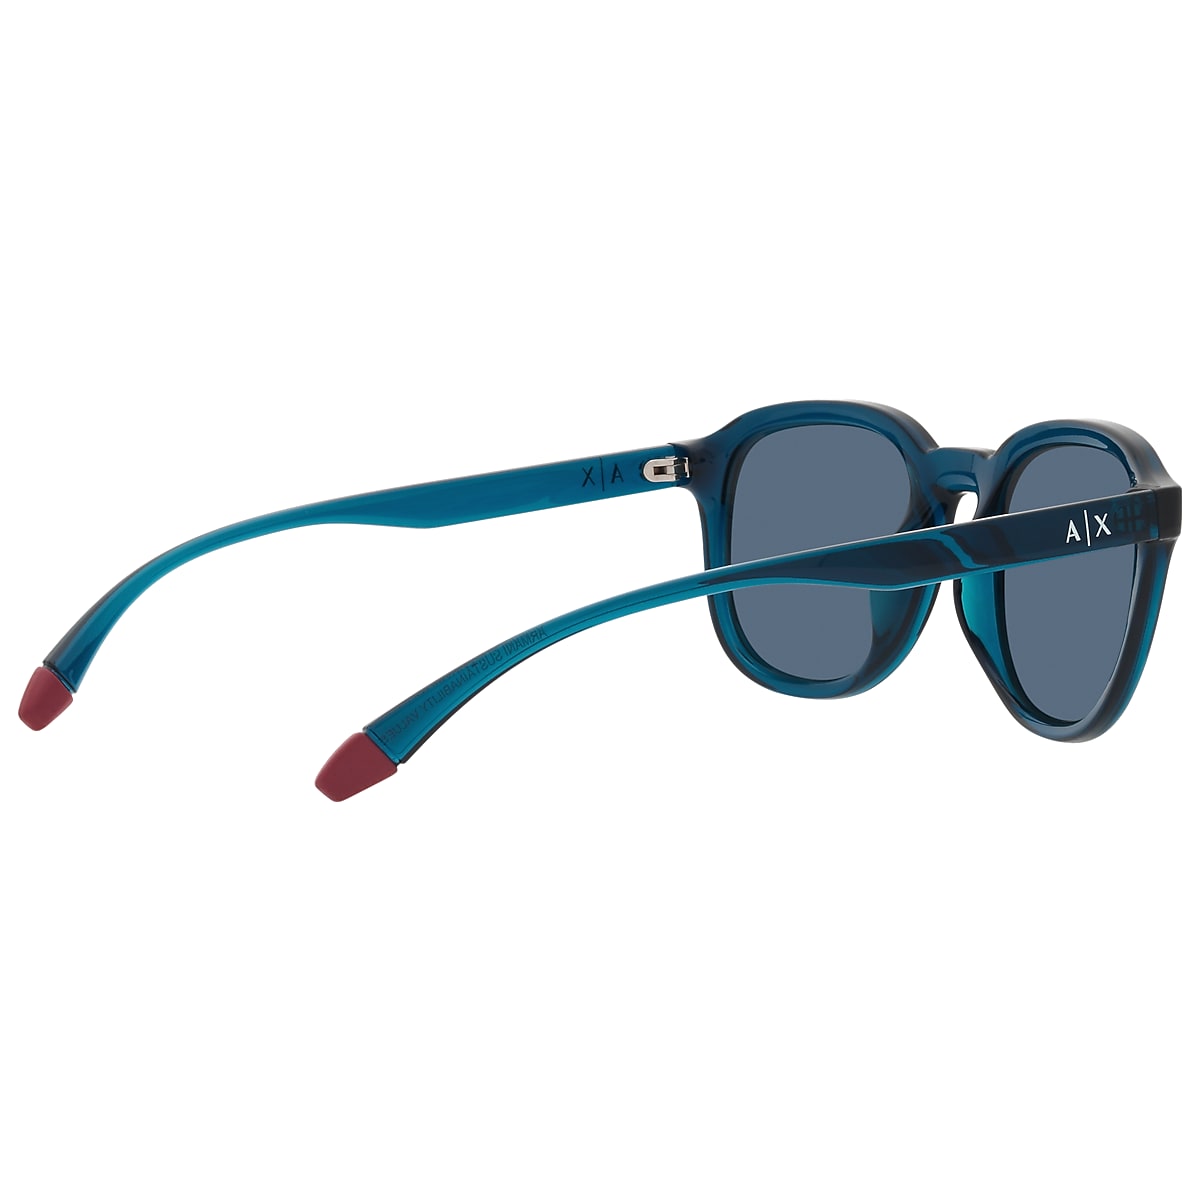 Armani Exchange Shiny Transparent Blue Sunglasses | Glasses.com 